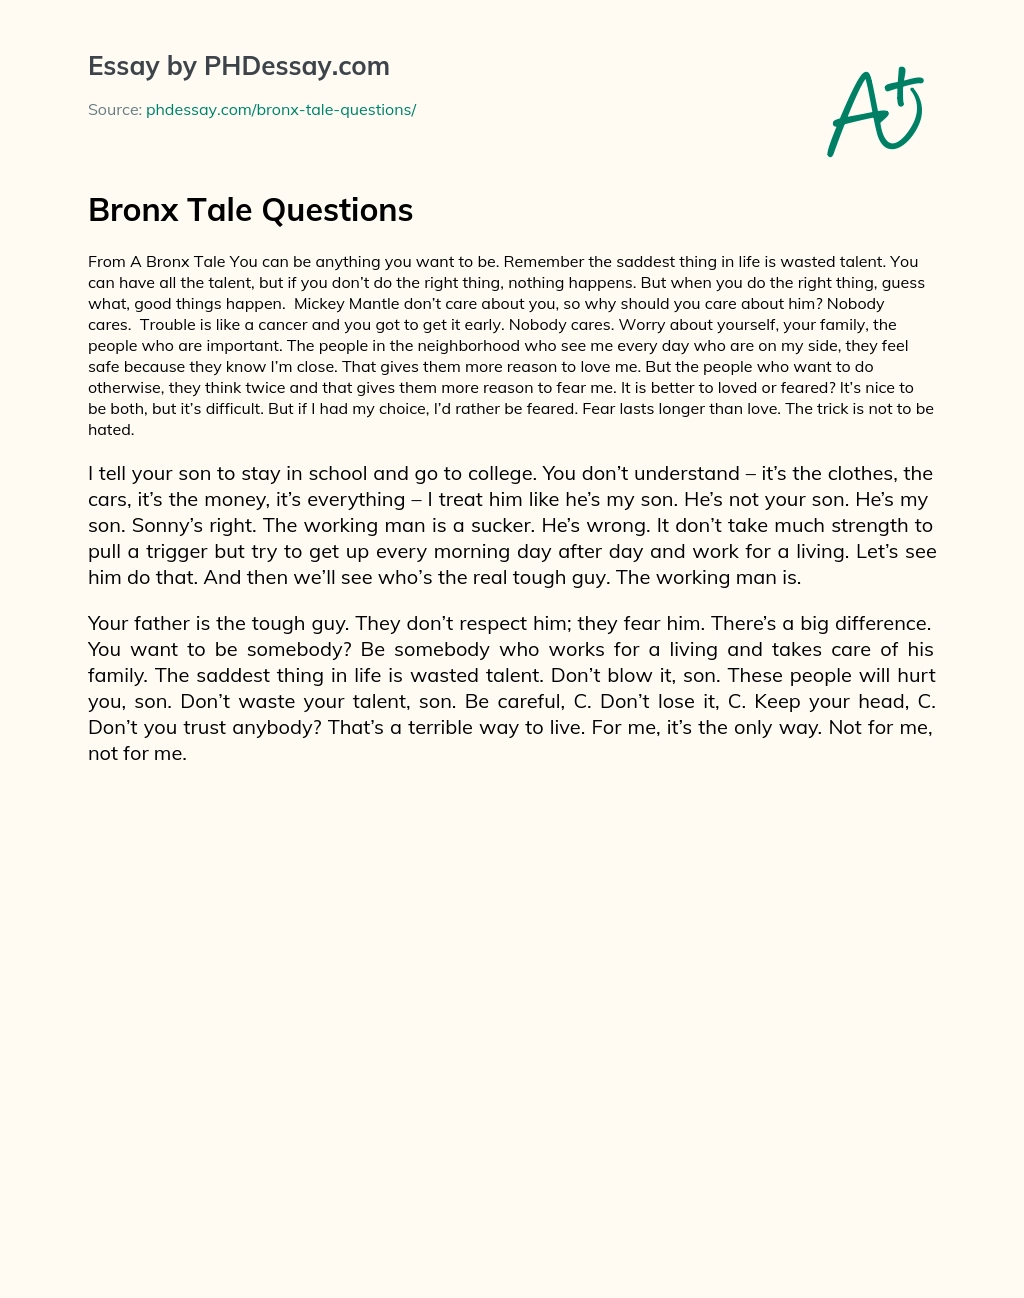 Bronx Tale Questions essay